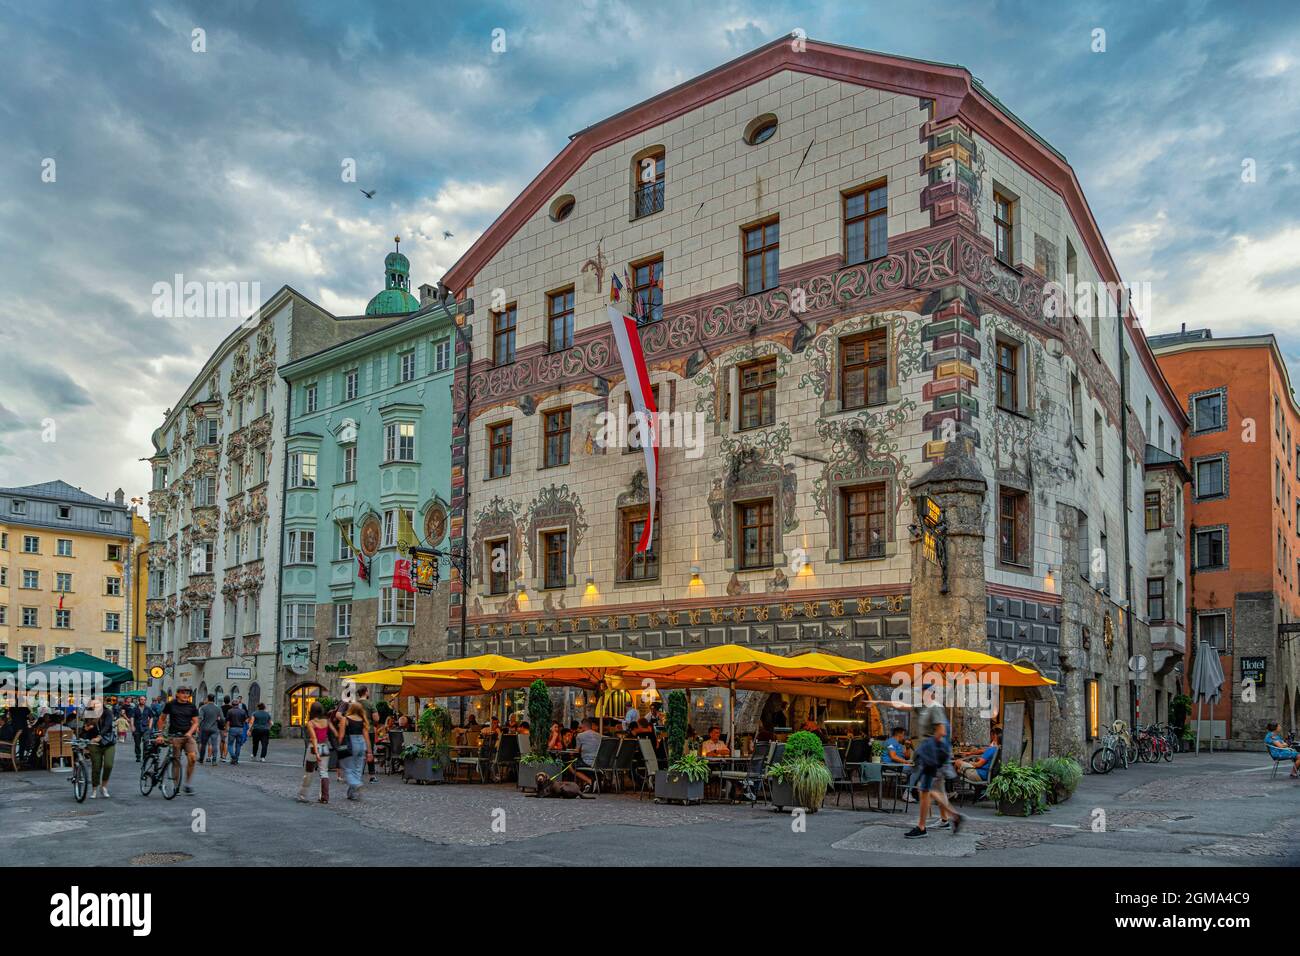 Pittoresche facciate decorate in modo tradizionale di tipiche case e ristoranti di Innsbruck. Innsbruck, Tirolo, Austria, Europa Foto Stock